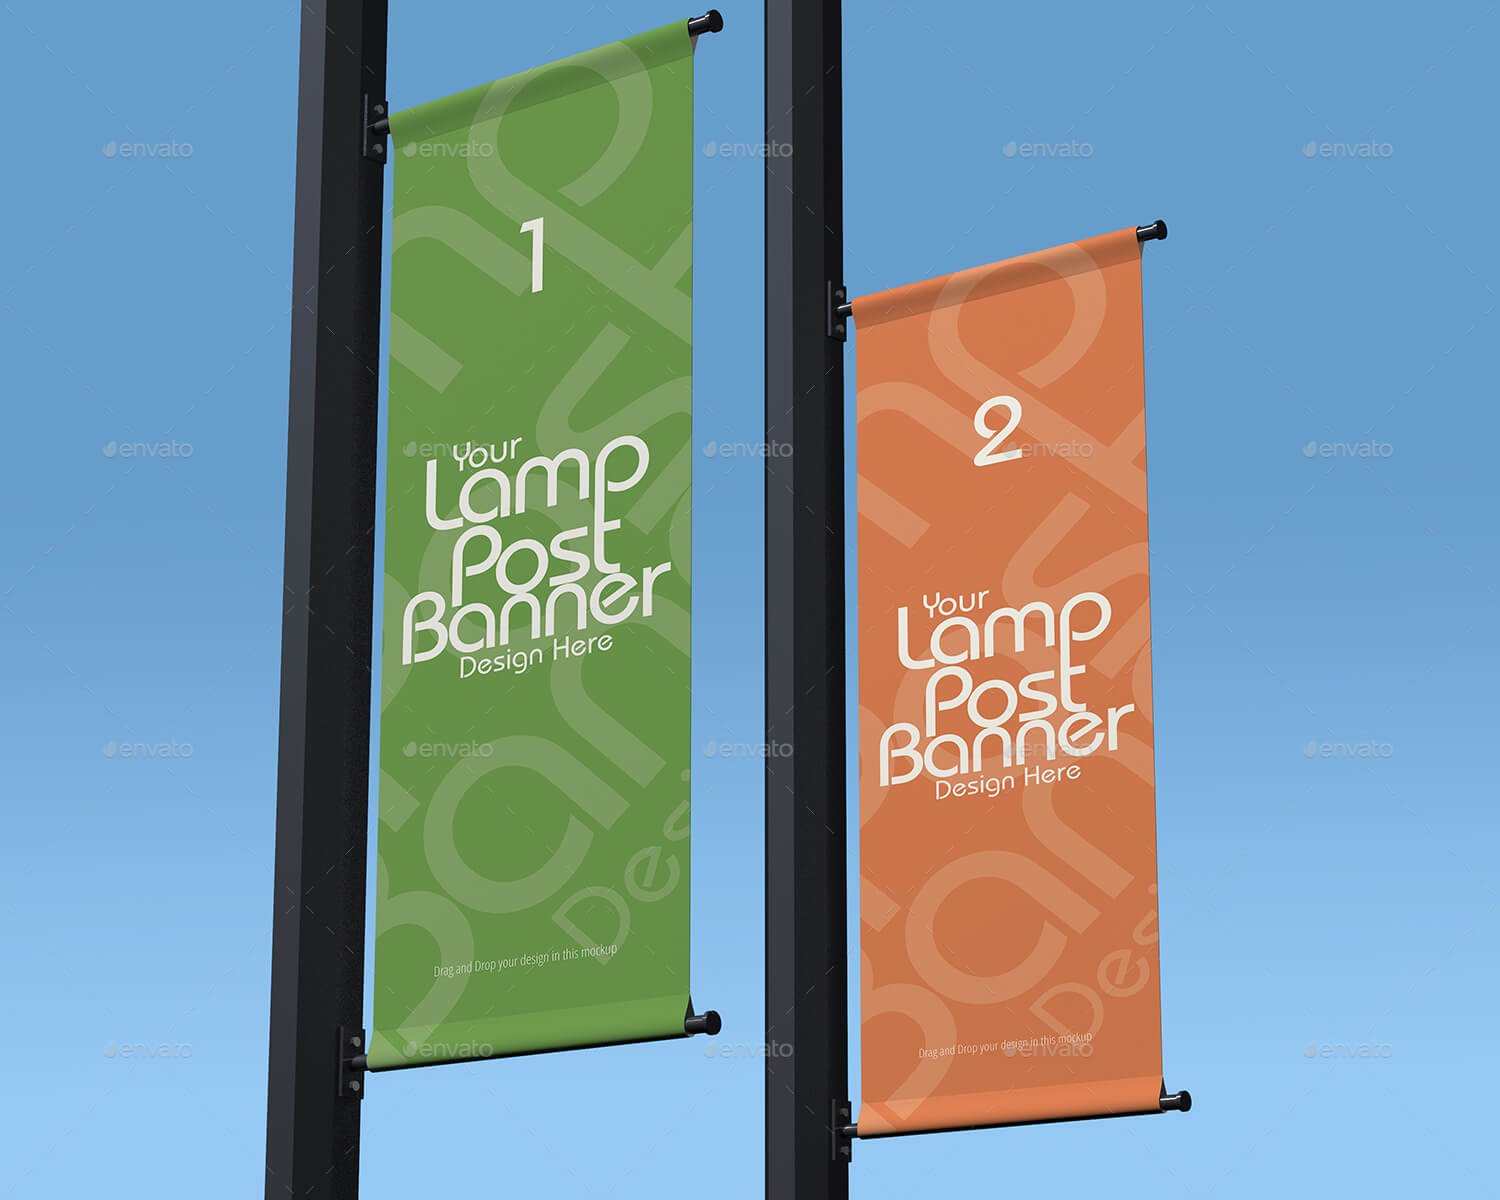 Lamp Post Banner Mockup (1)